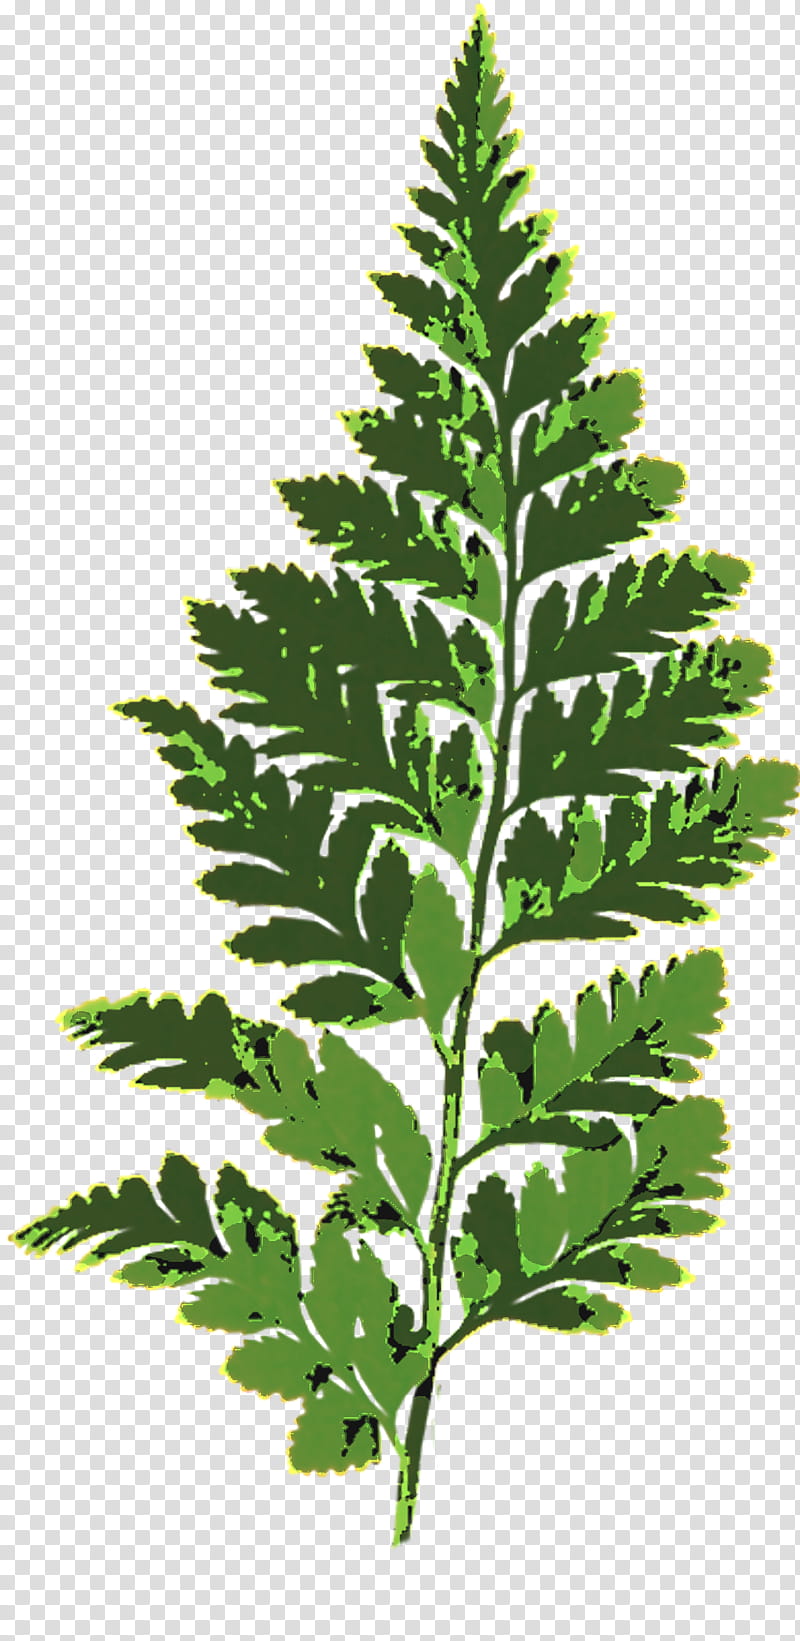 Green Leaf, Fern, Vascular Plant, Plants, Burknar, Nonvascular Plant, Male Fern, Houseplant transparent background PNG clipart